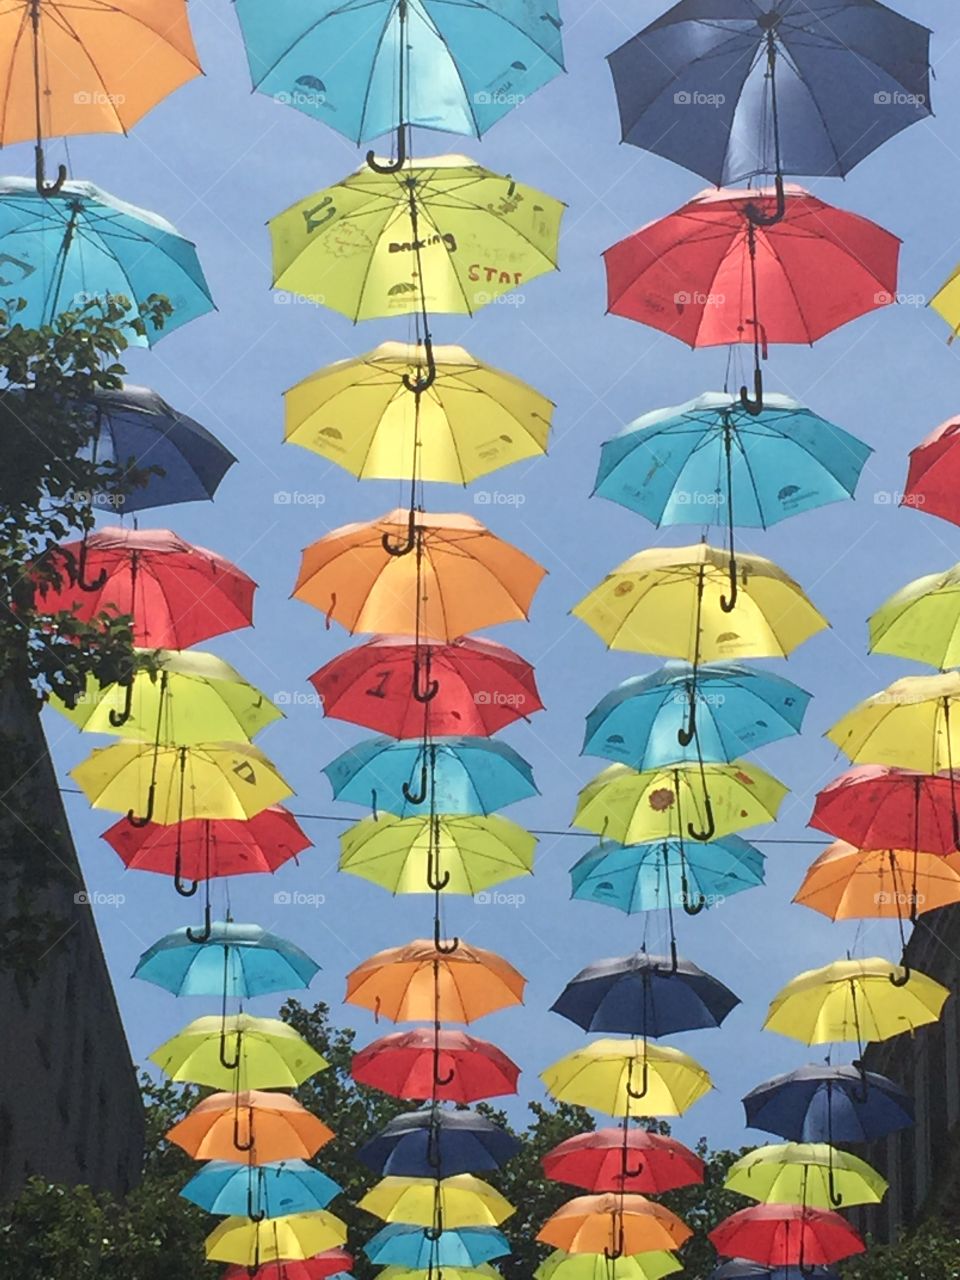 Umbrella art city scene 